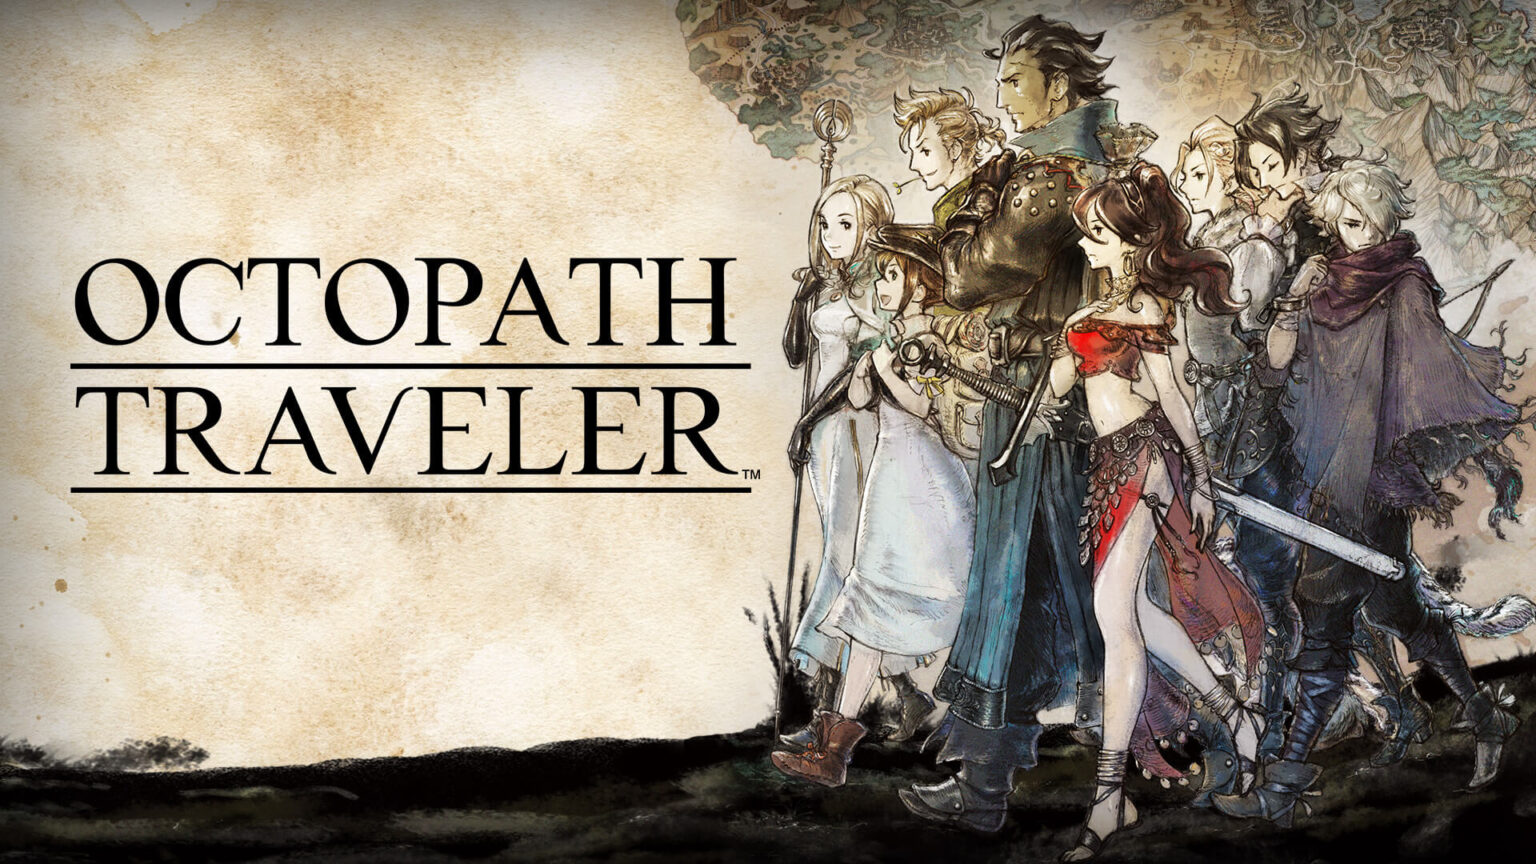 download free octopath traveler